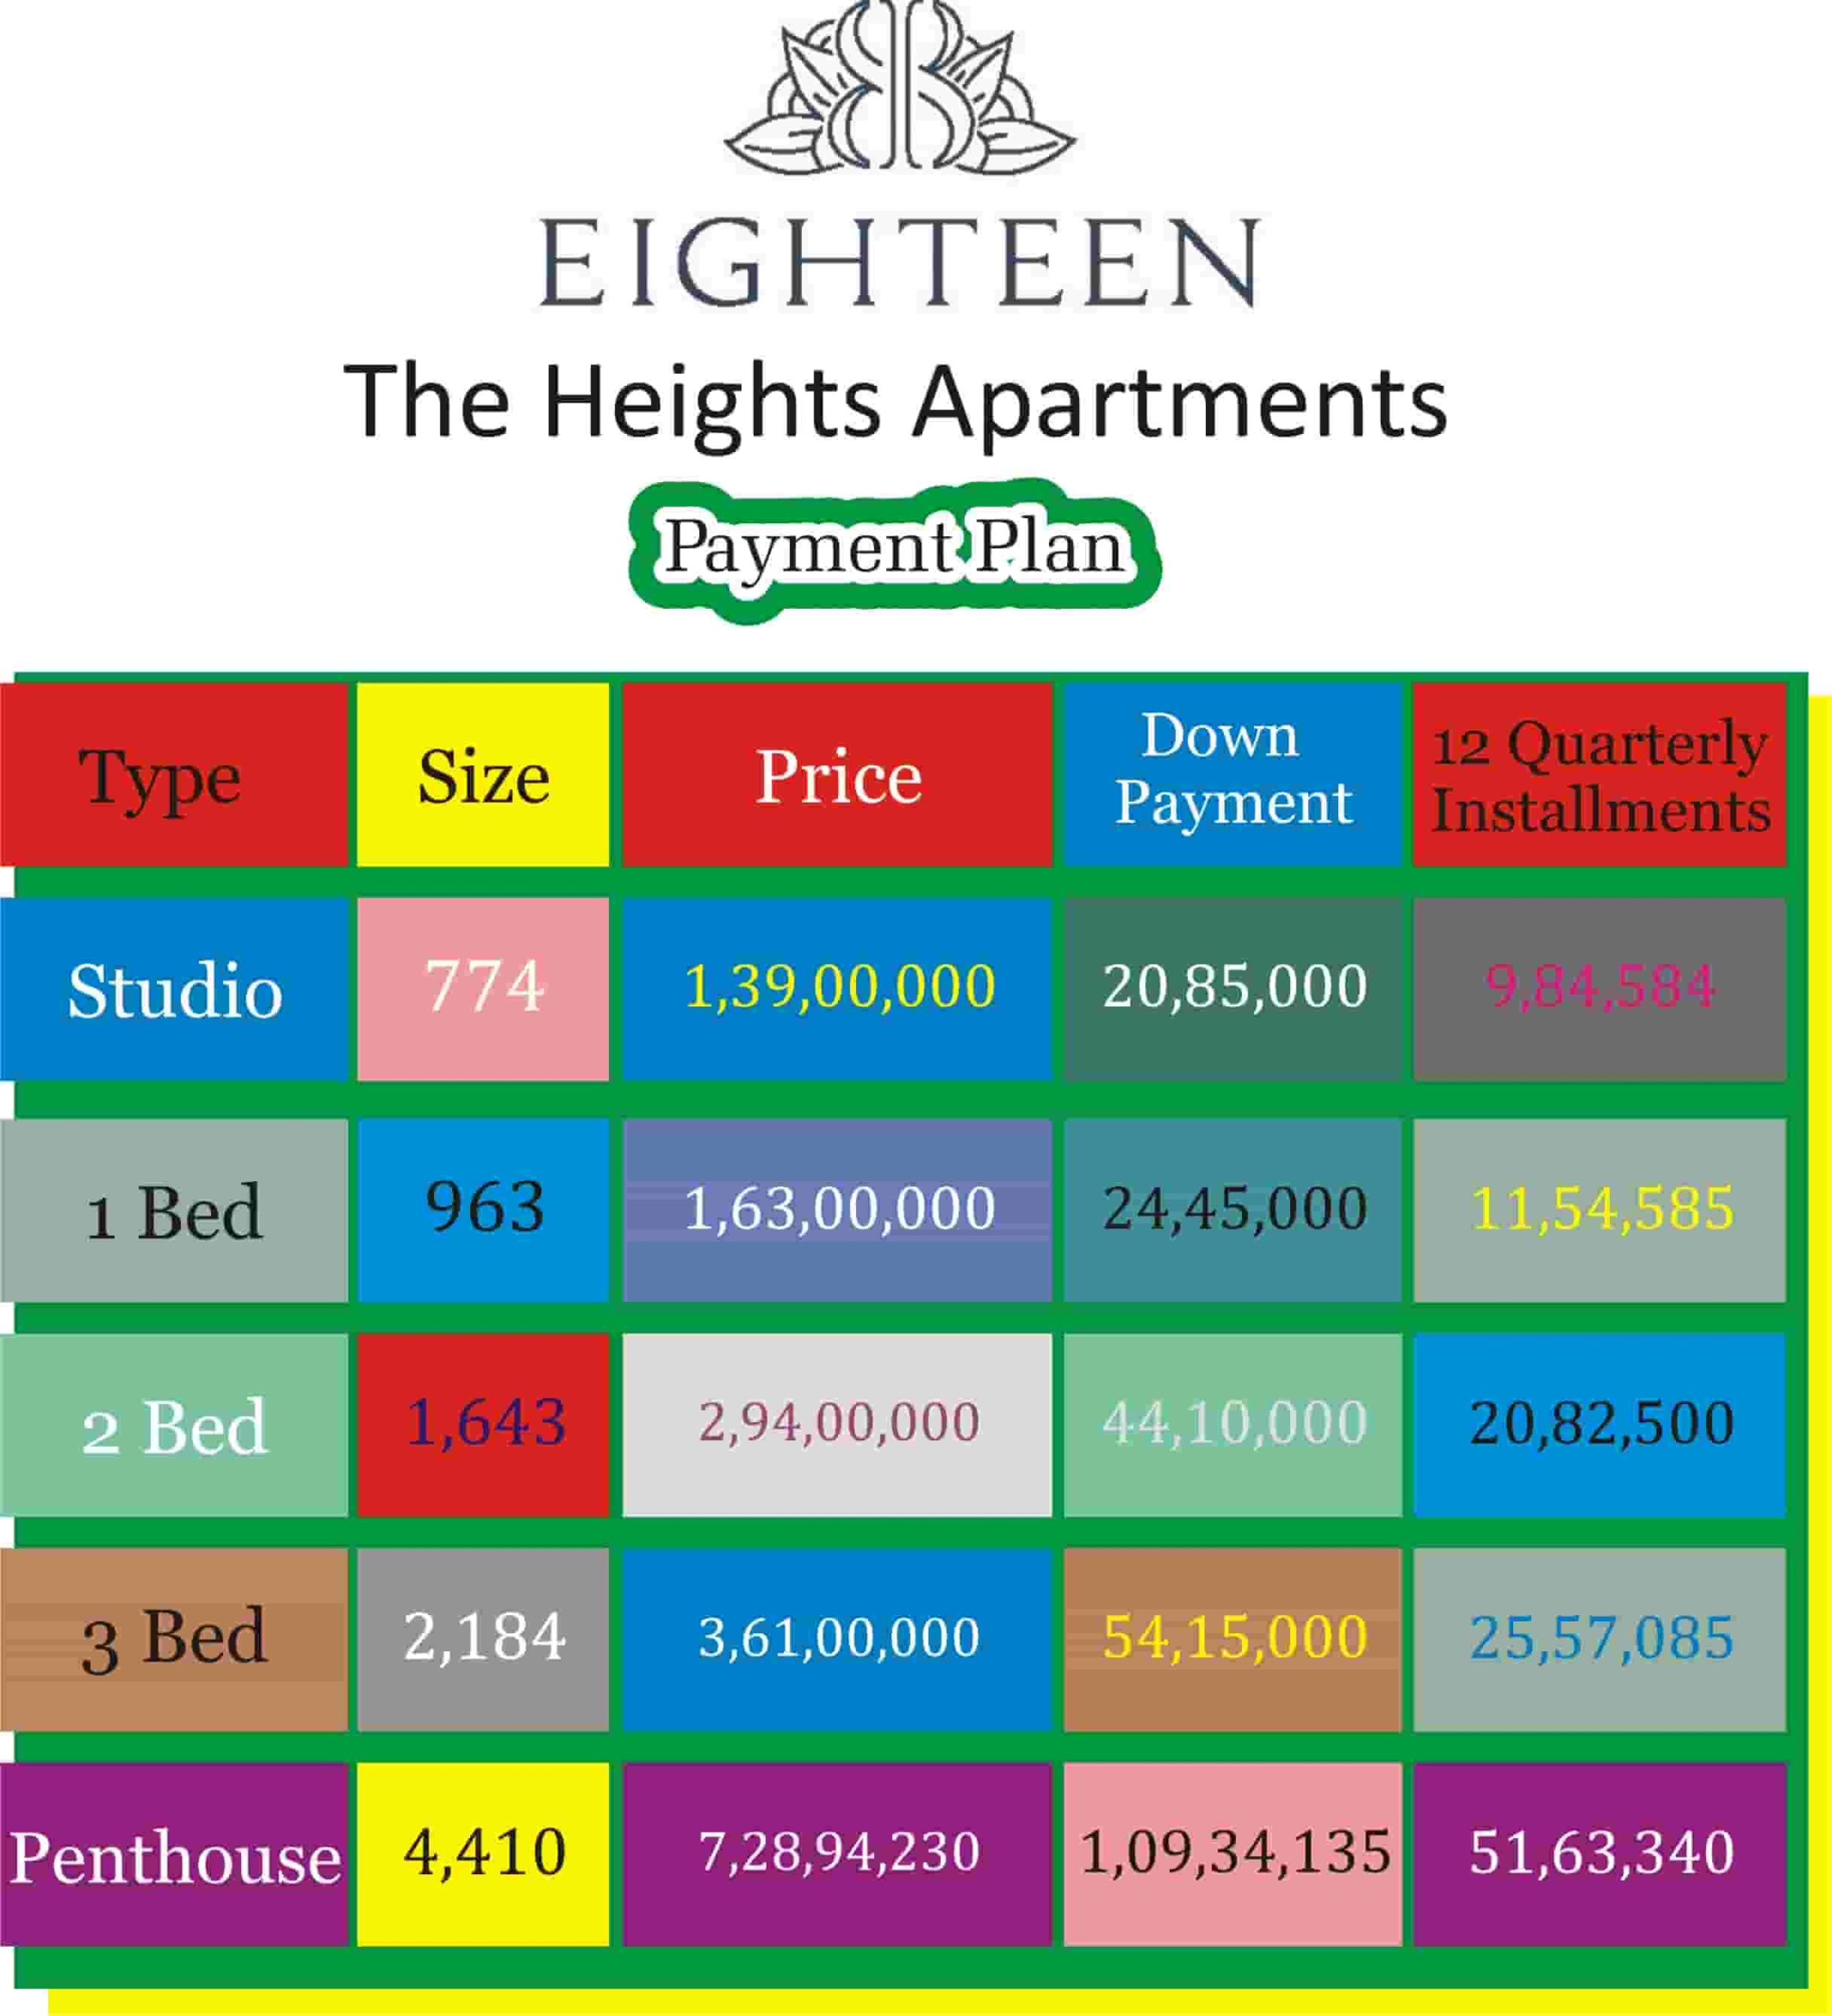 Eighteen Apartments Payment Plan